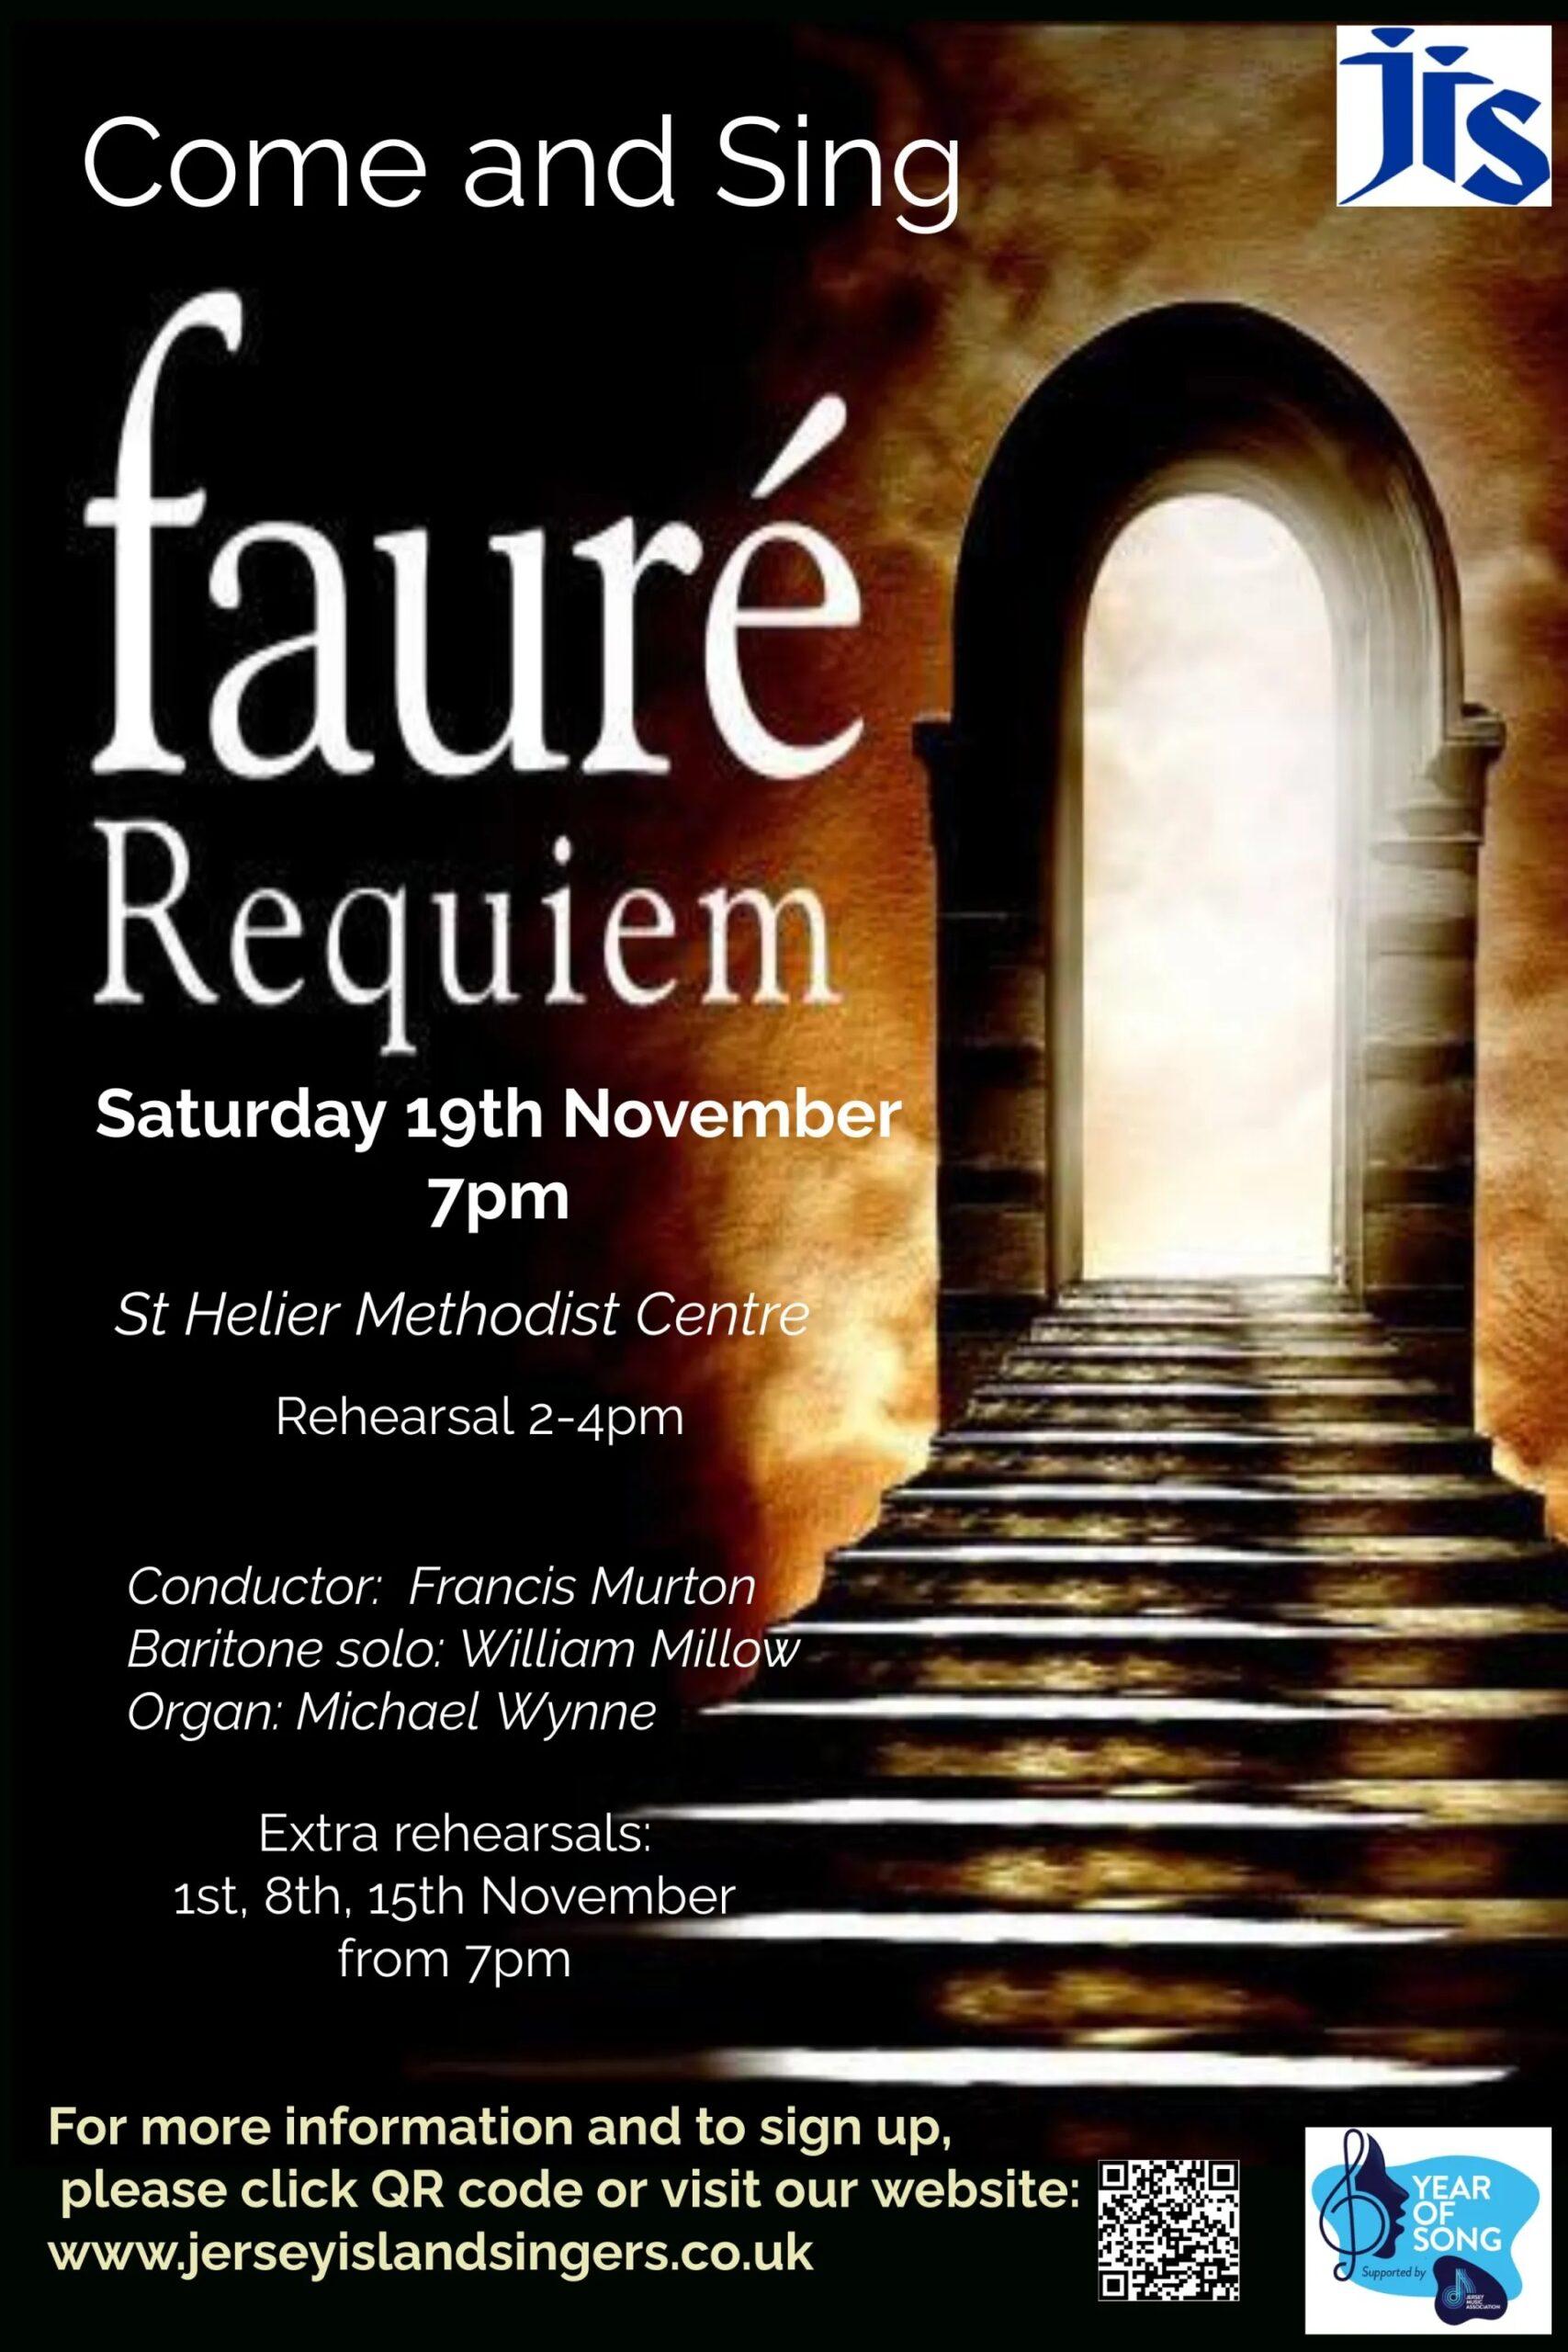 Faure Requiem event